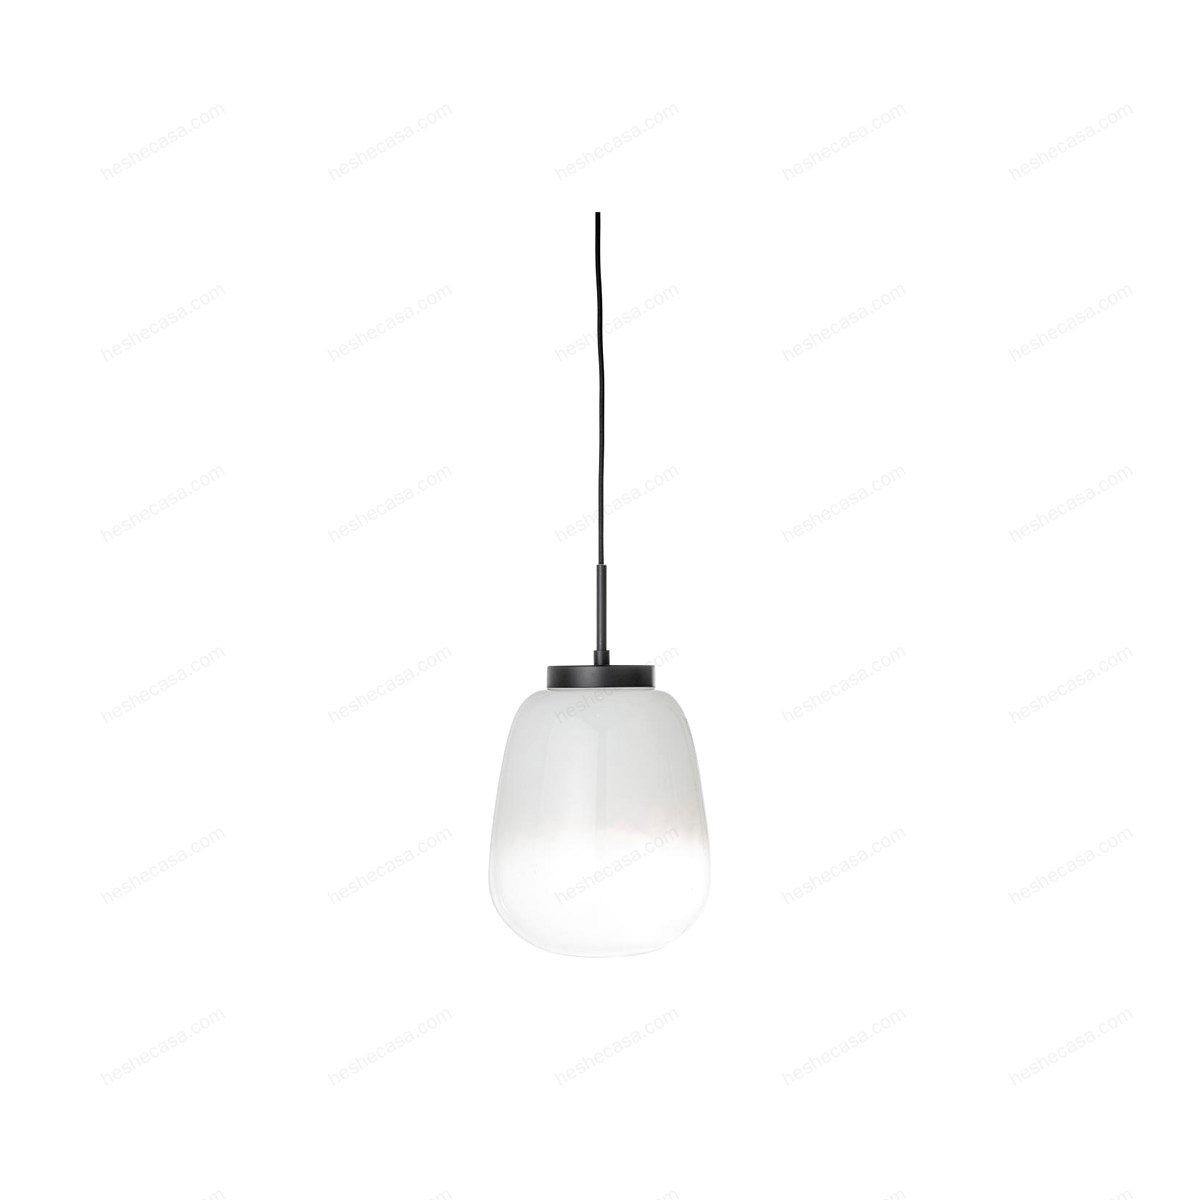 Ece Pendant Lamp, White, Glass吊灯